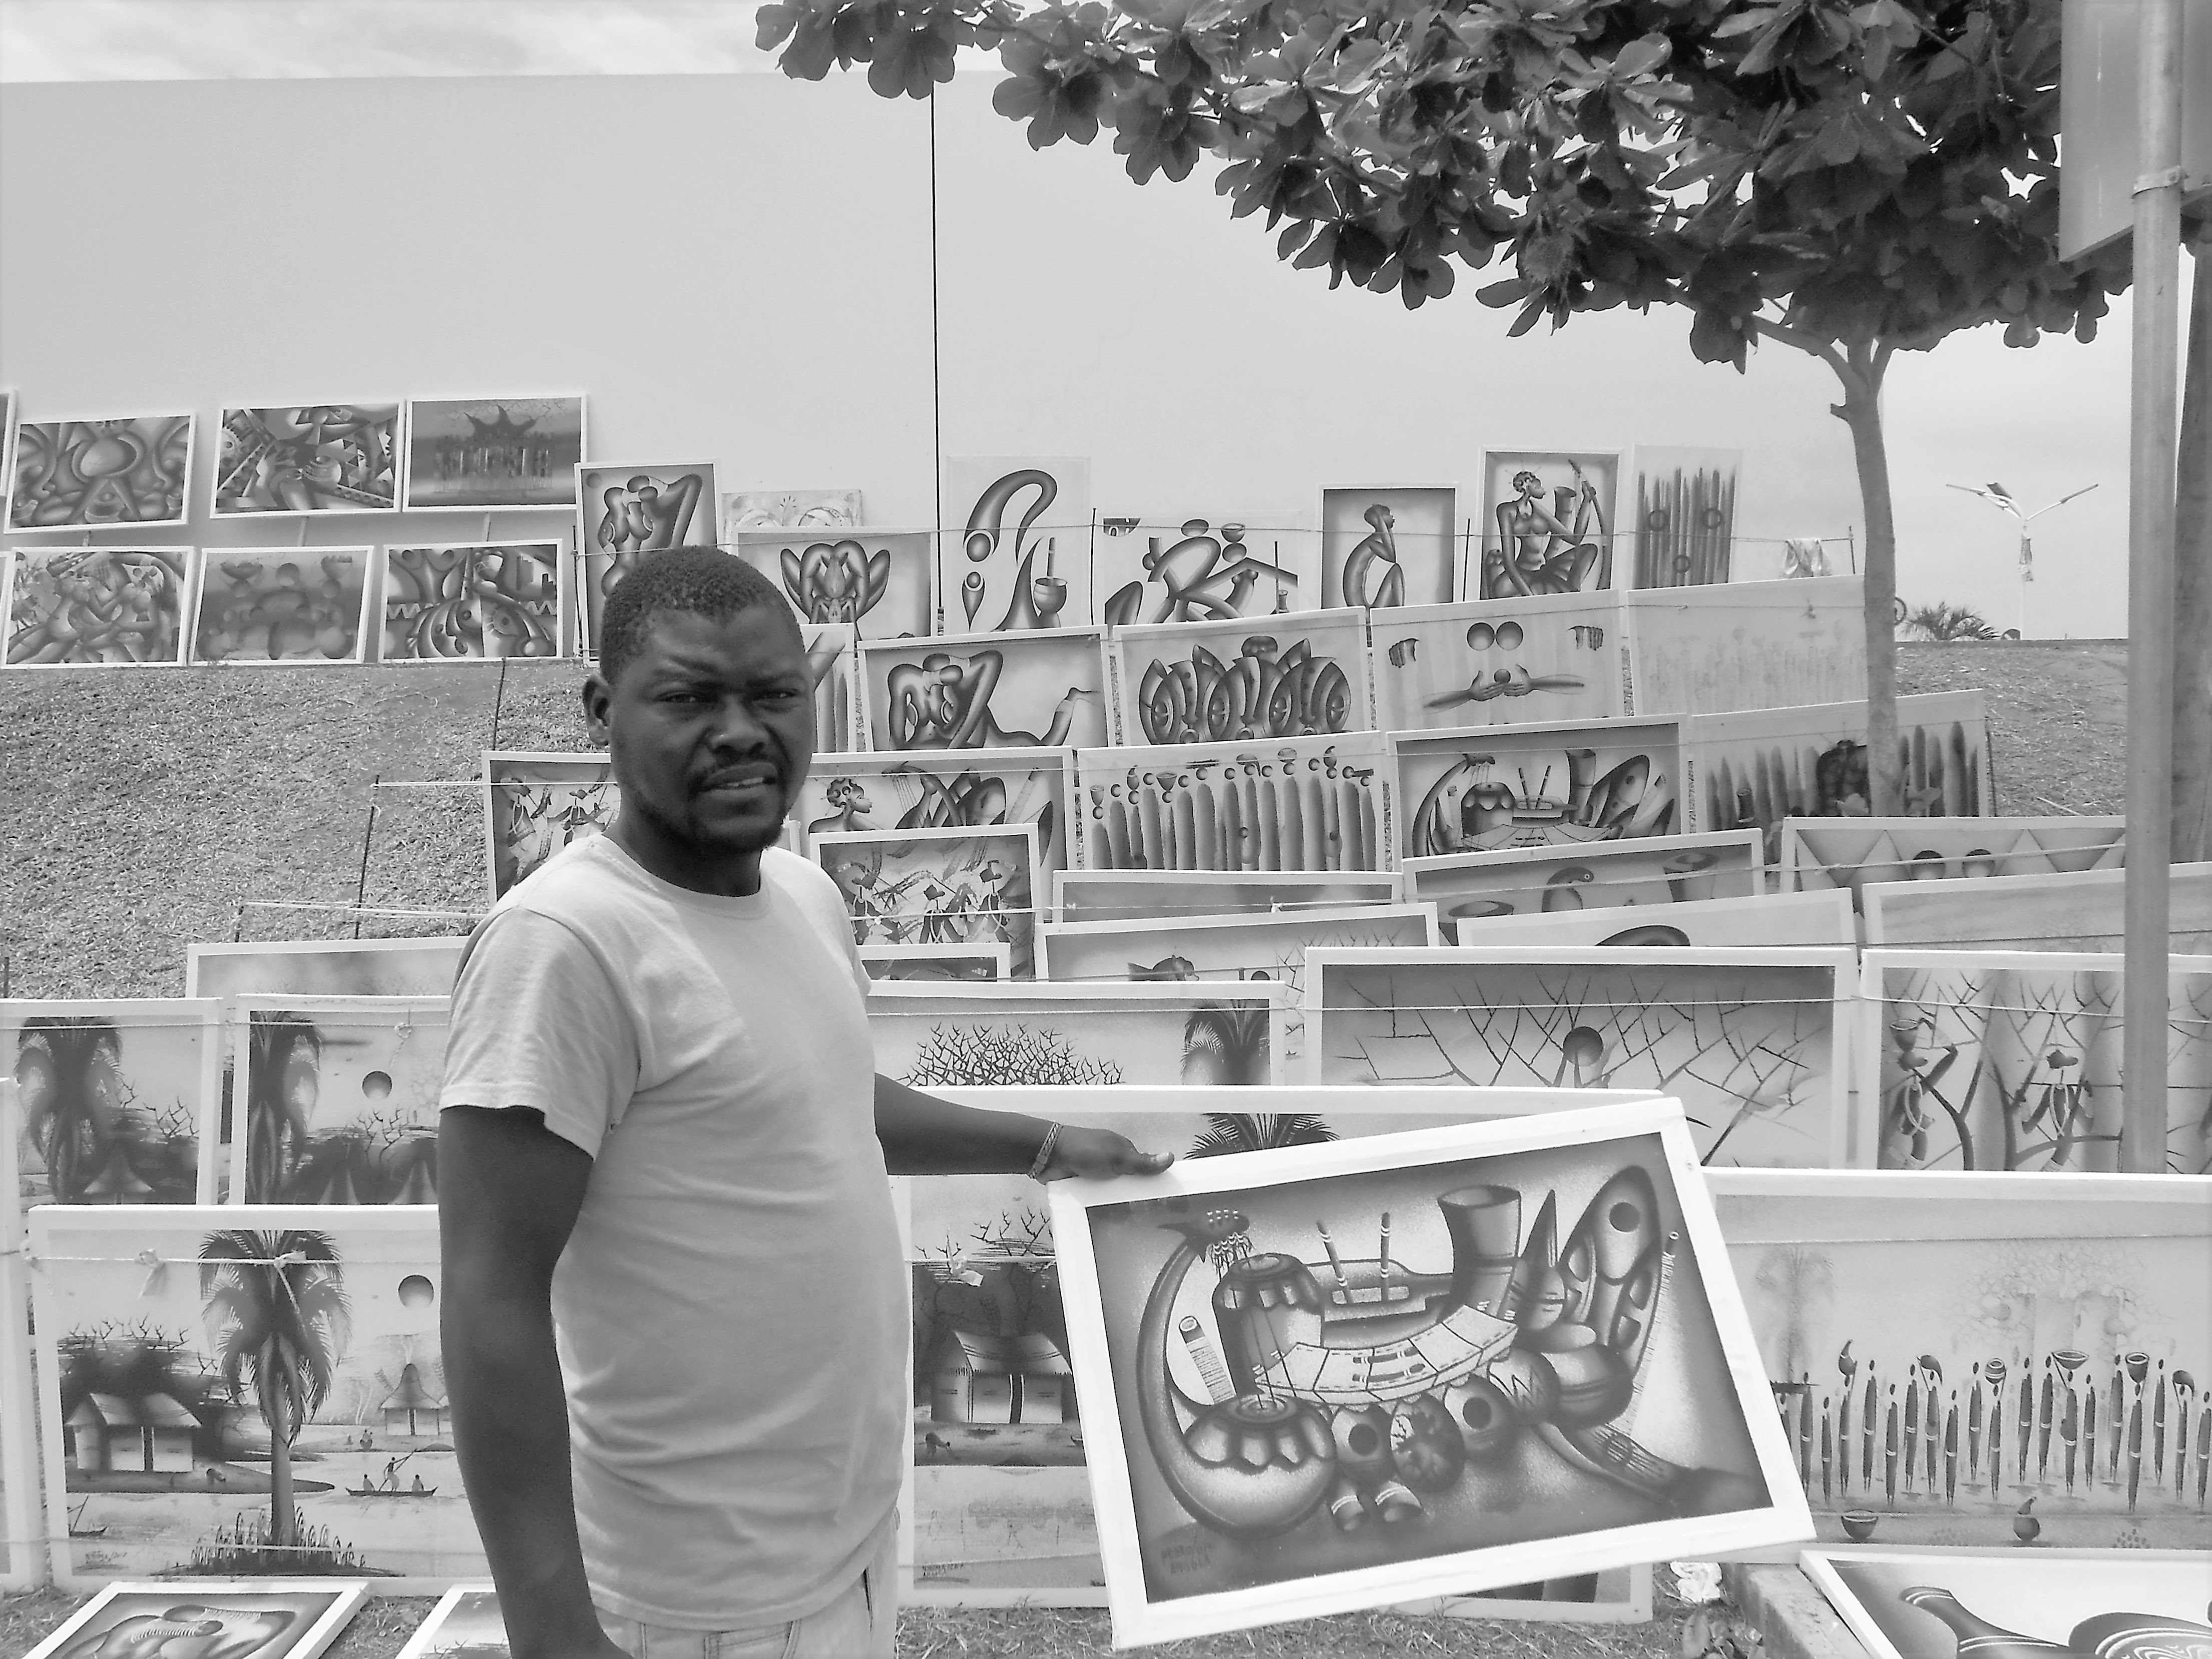 The Art Center & Craftsmen’s Market: Angolan History through Its Art